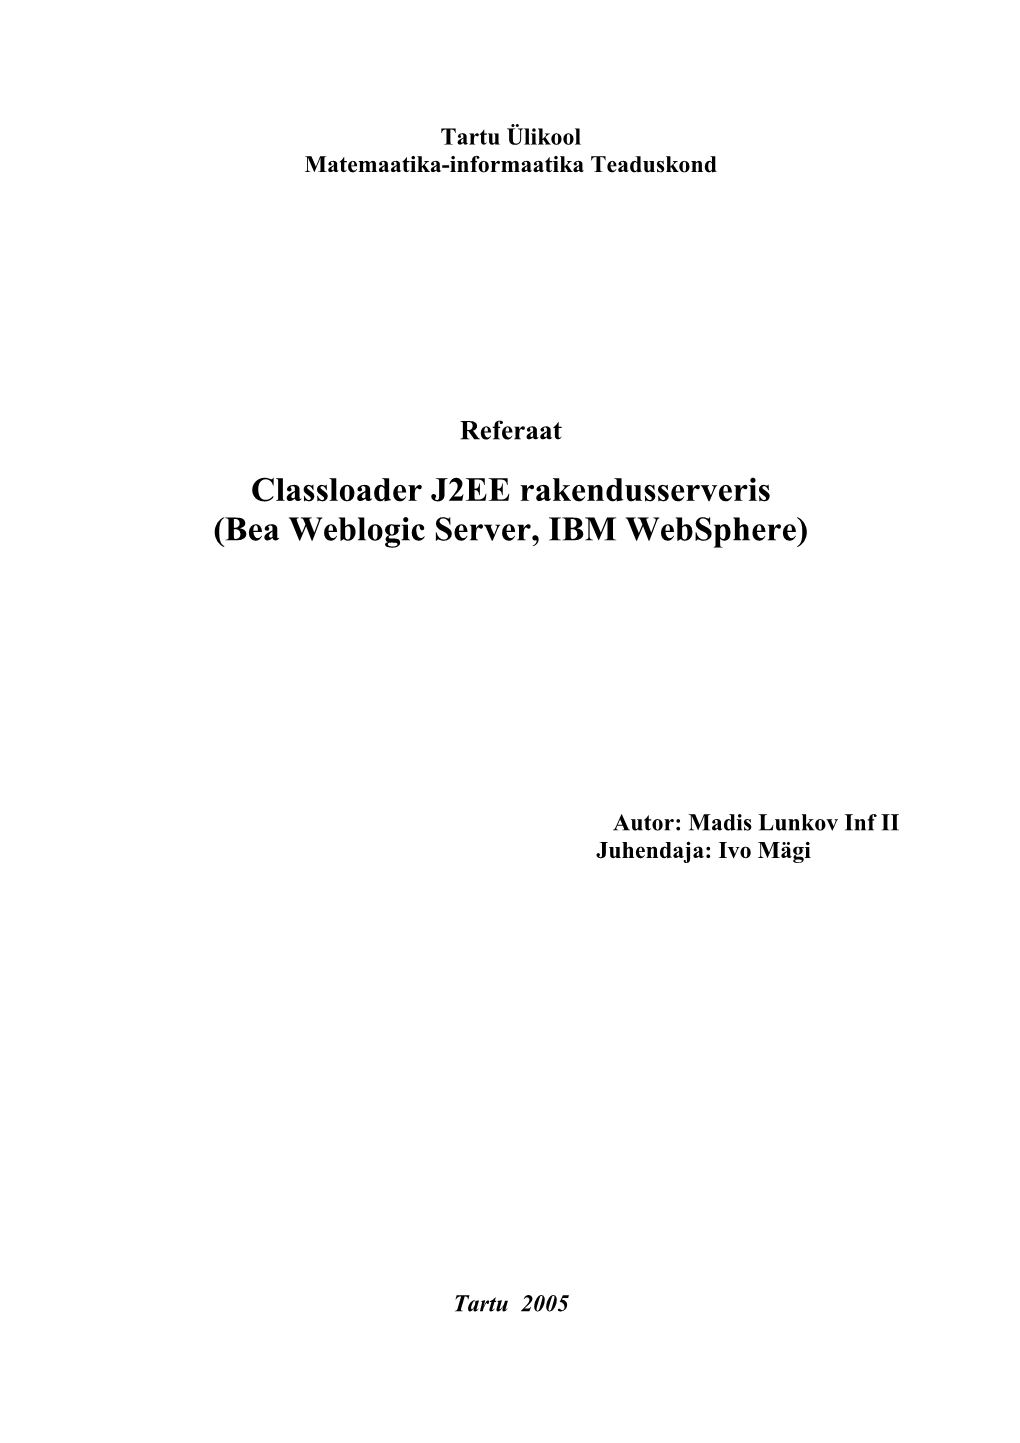 Bea Weblogic Server, IBM Websphere)